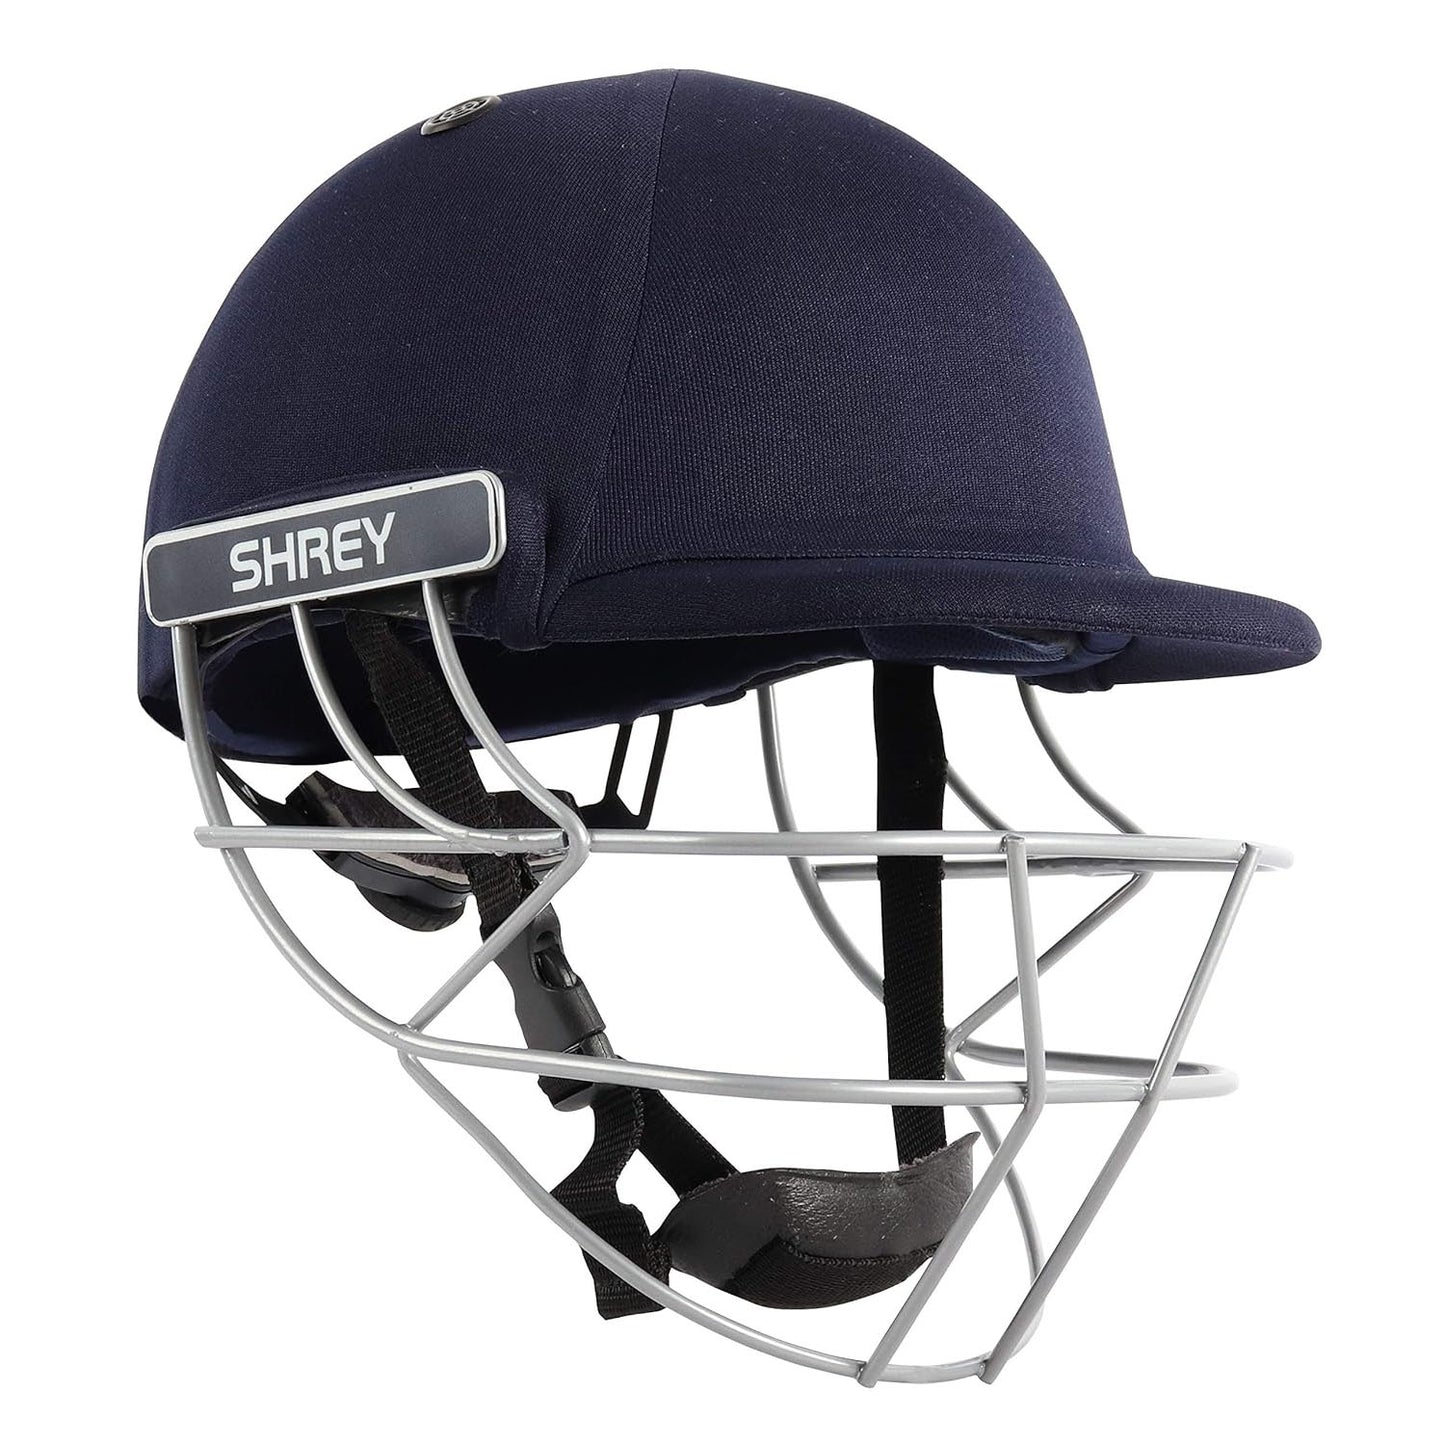 Shrey Pro Guard Wicket Keeping Stainless Steel Visor H122 Helmet, Navy - Best Price online Prokicksports.com